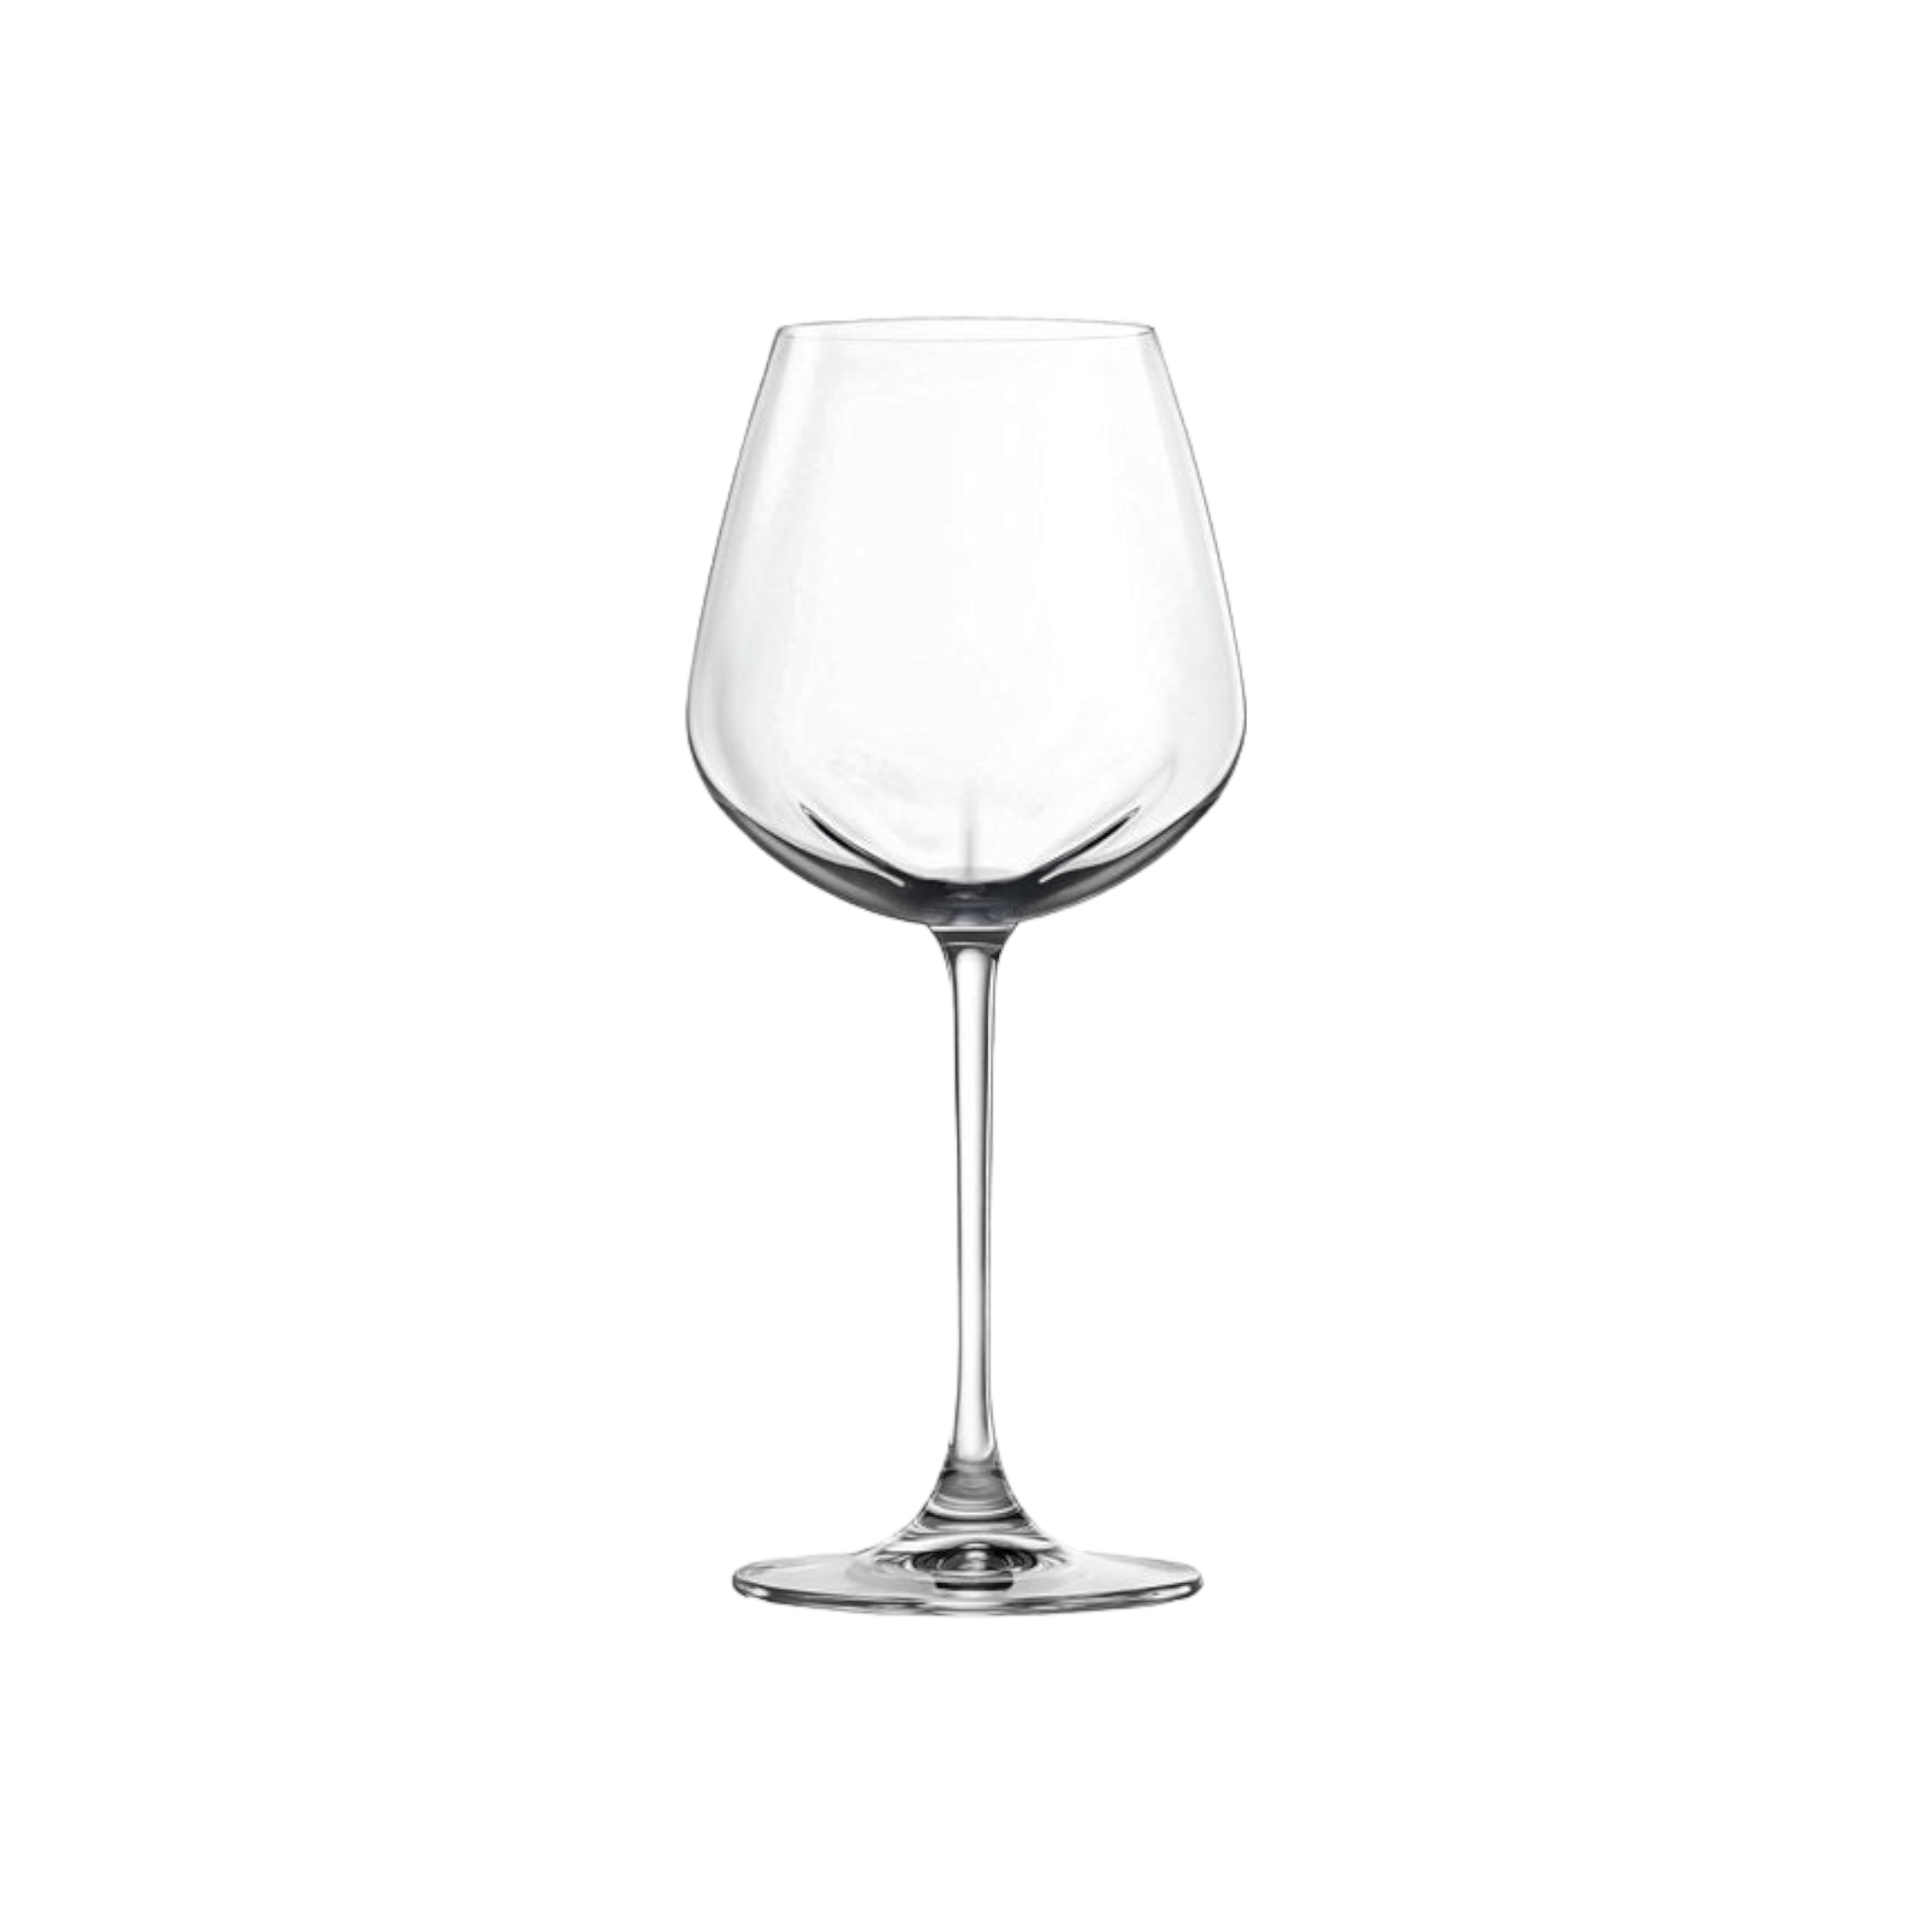 LUCARIS Crystal Glass Tumbler 485ml Red Wine Glasses 2pc Set